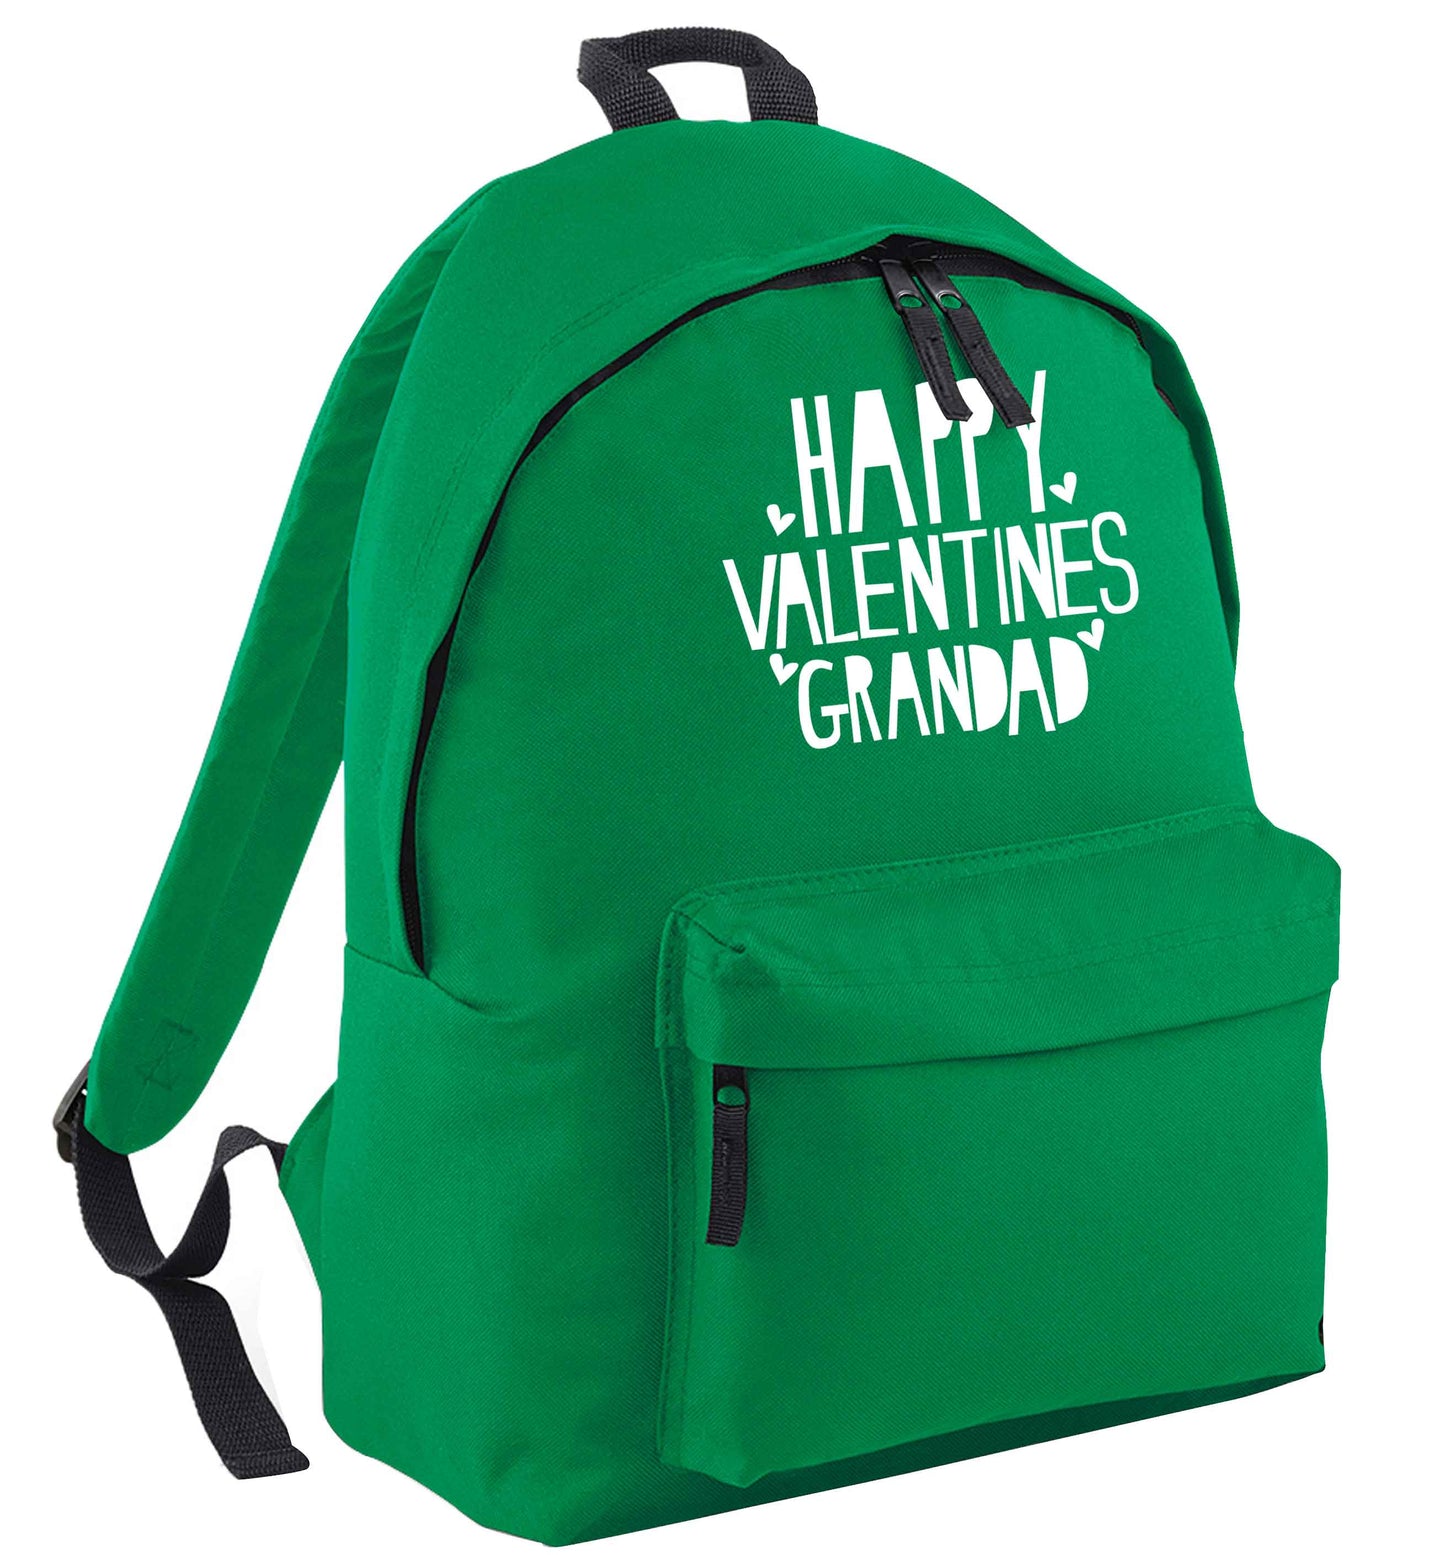 Happy valentines grandad green adults backpack